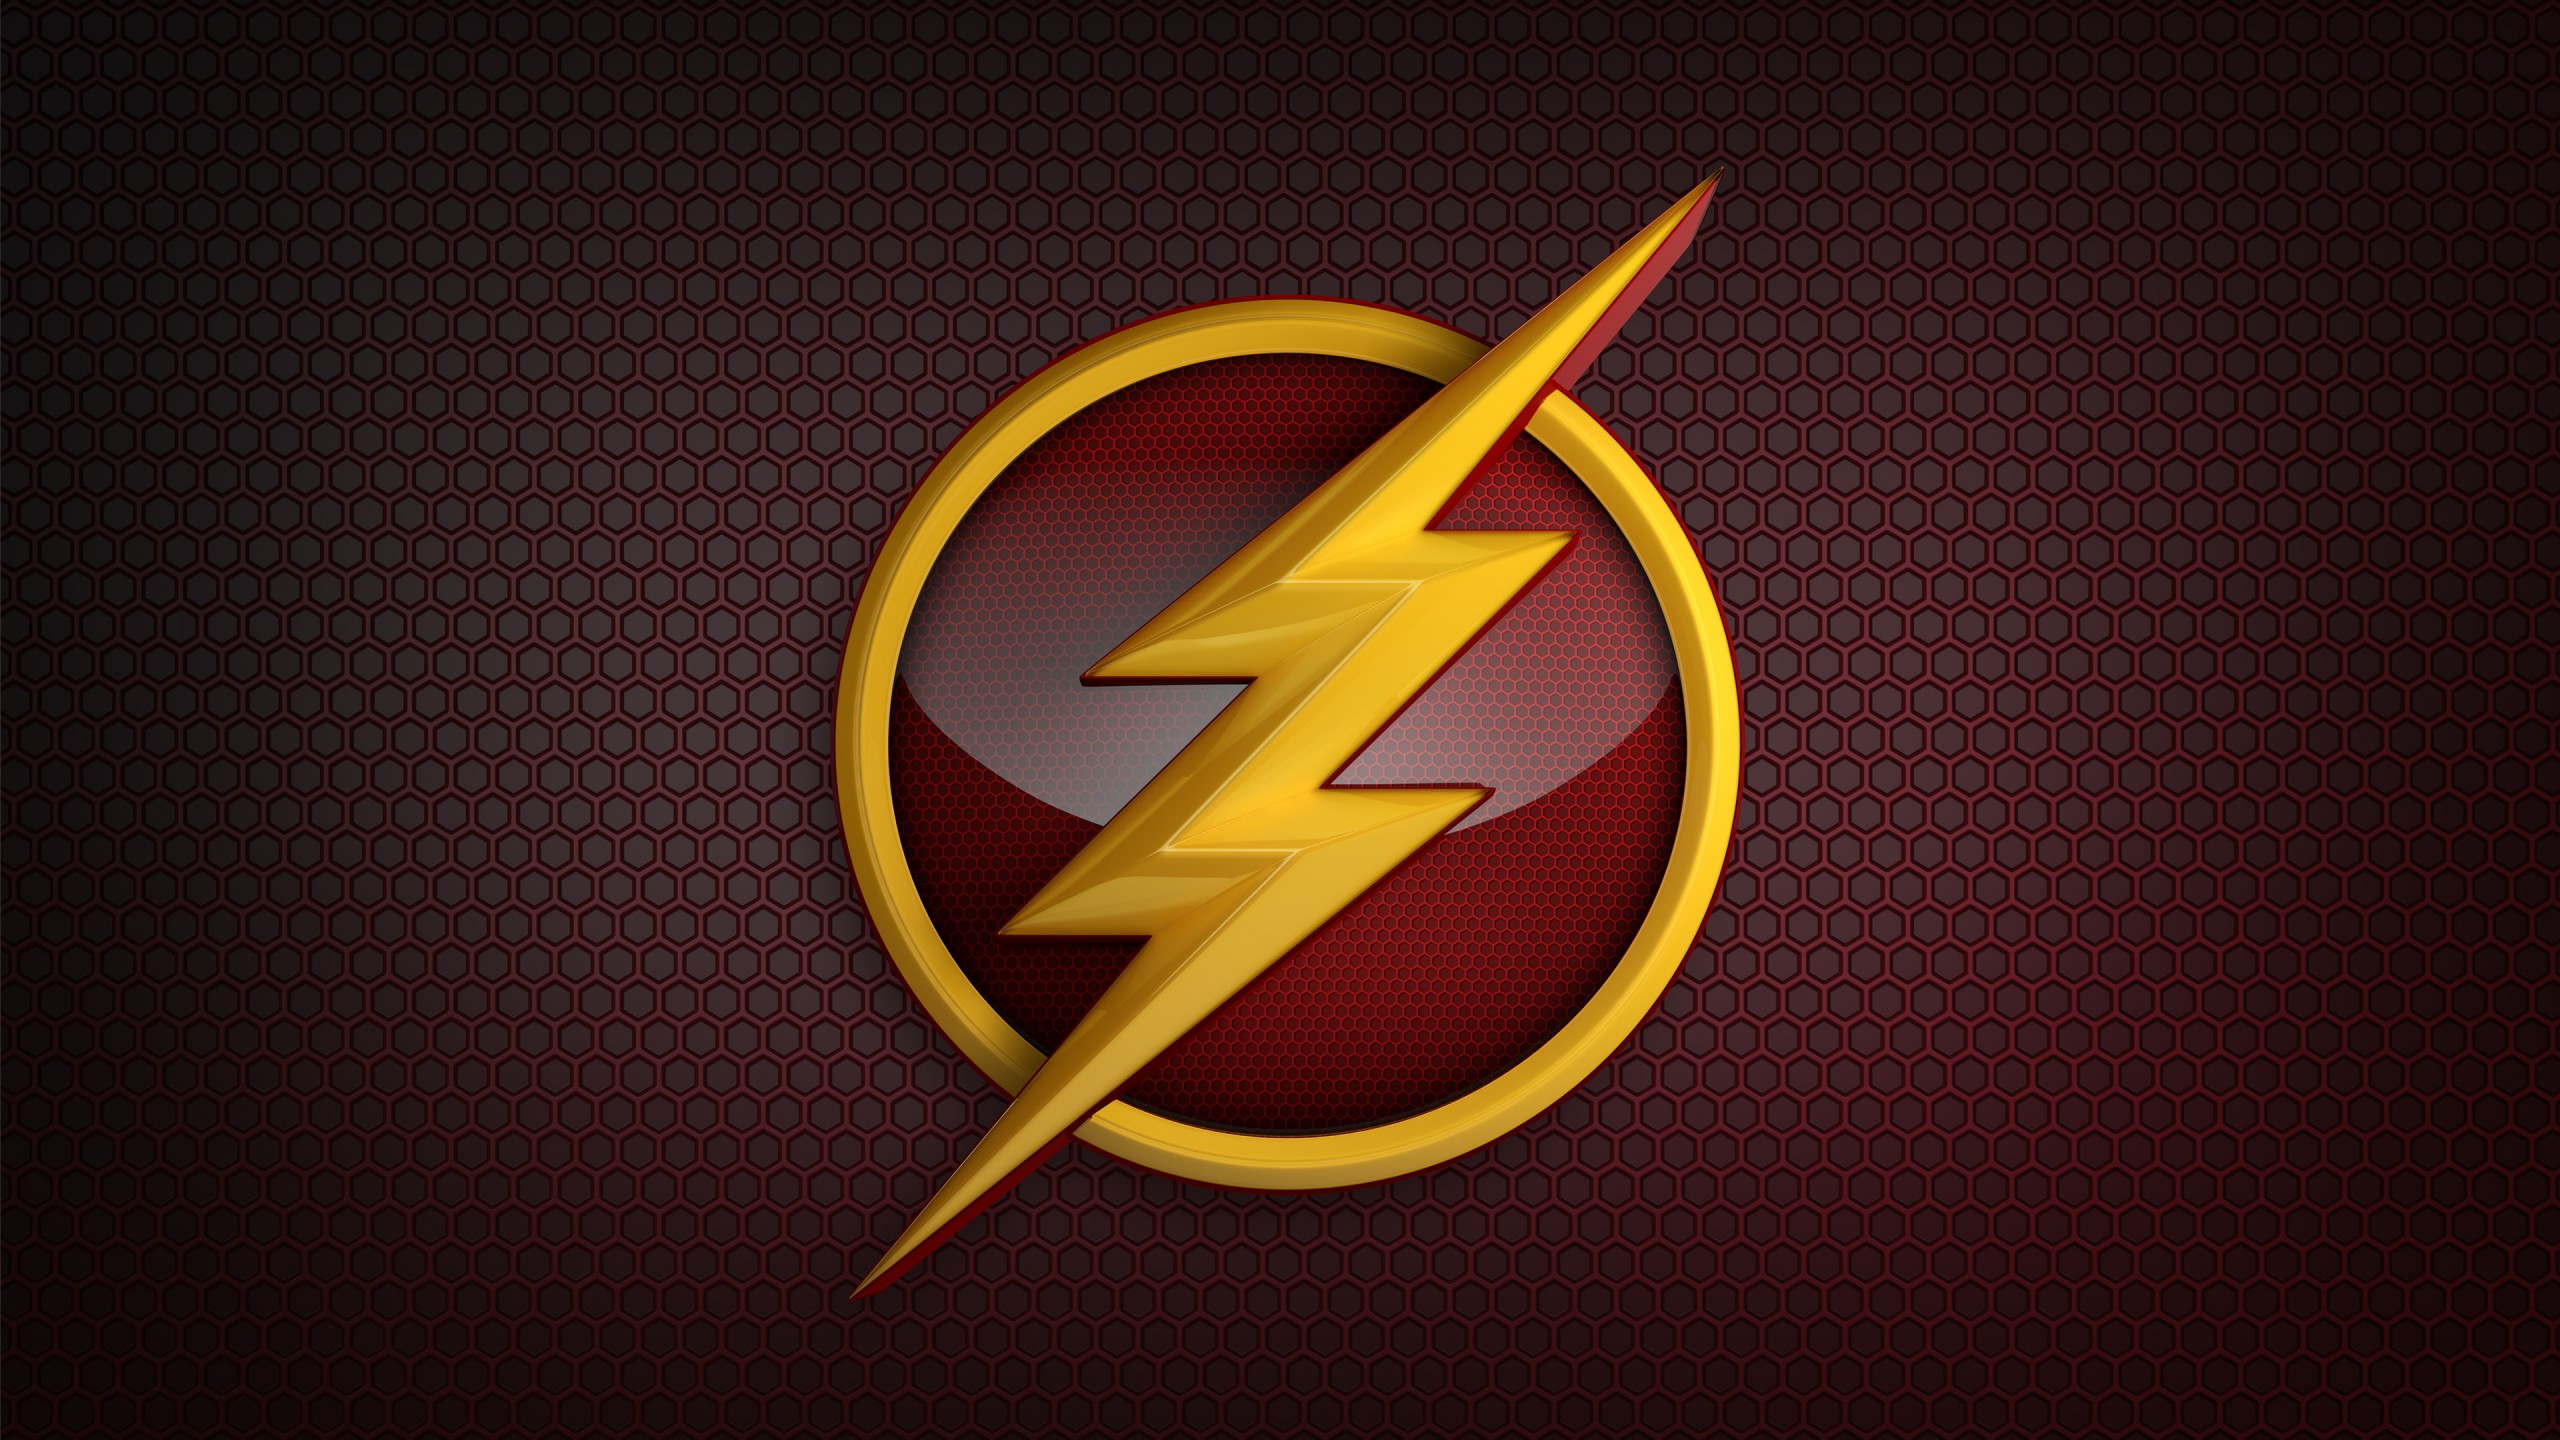 The Flash Lightning Bolt 4K HD Wallpapers